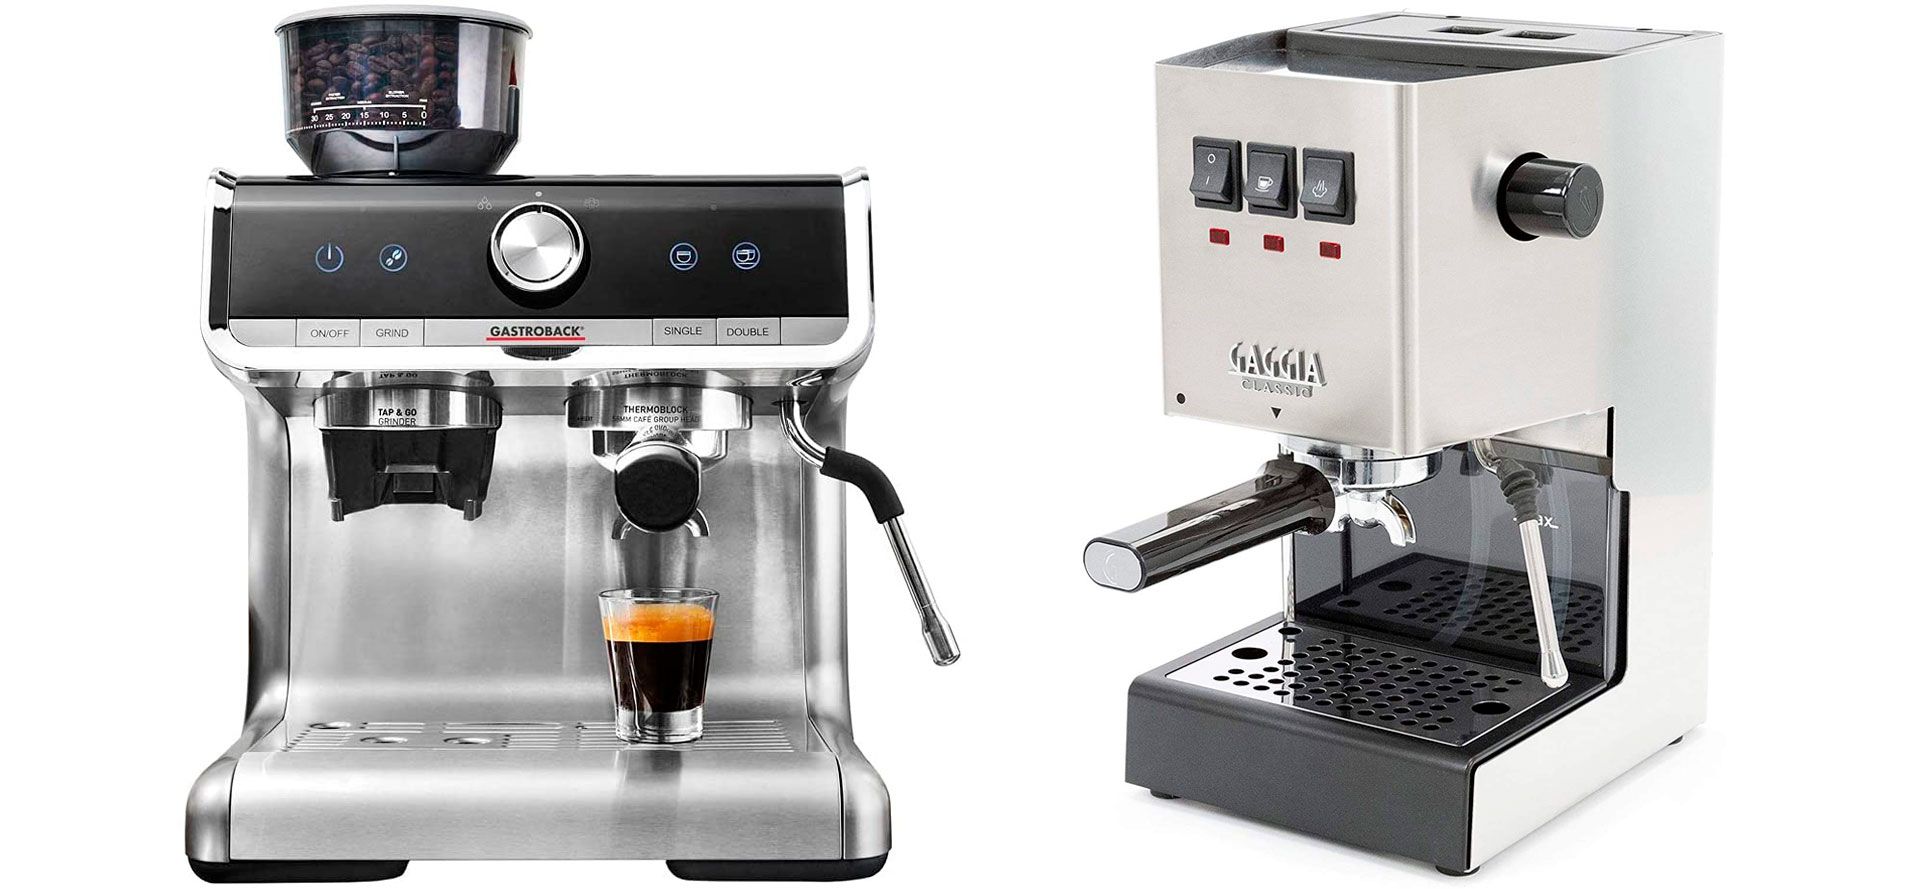 Best Italian Espresso Machines For Home.